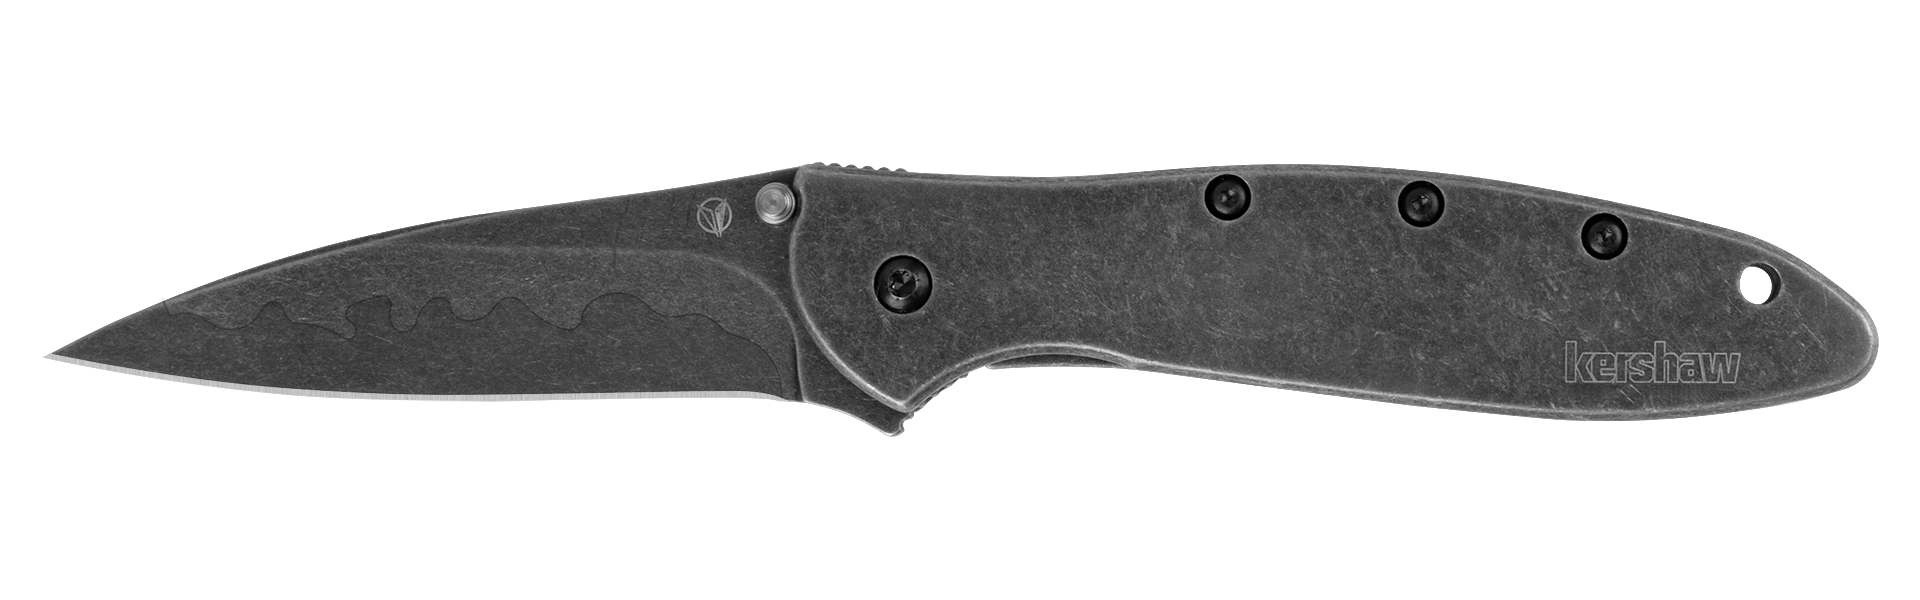 Kershaw Leek - Assisted Opening - Stainless Handle - Composite Blade - Blackwash Finish - 1660CBBW